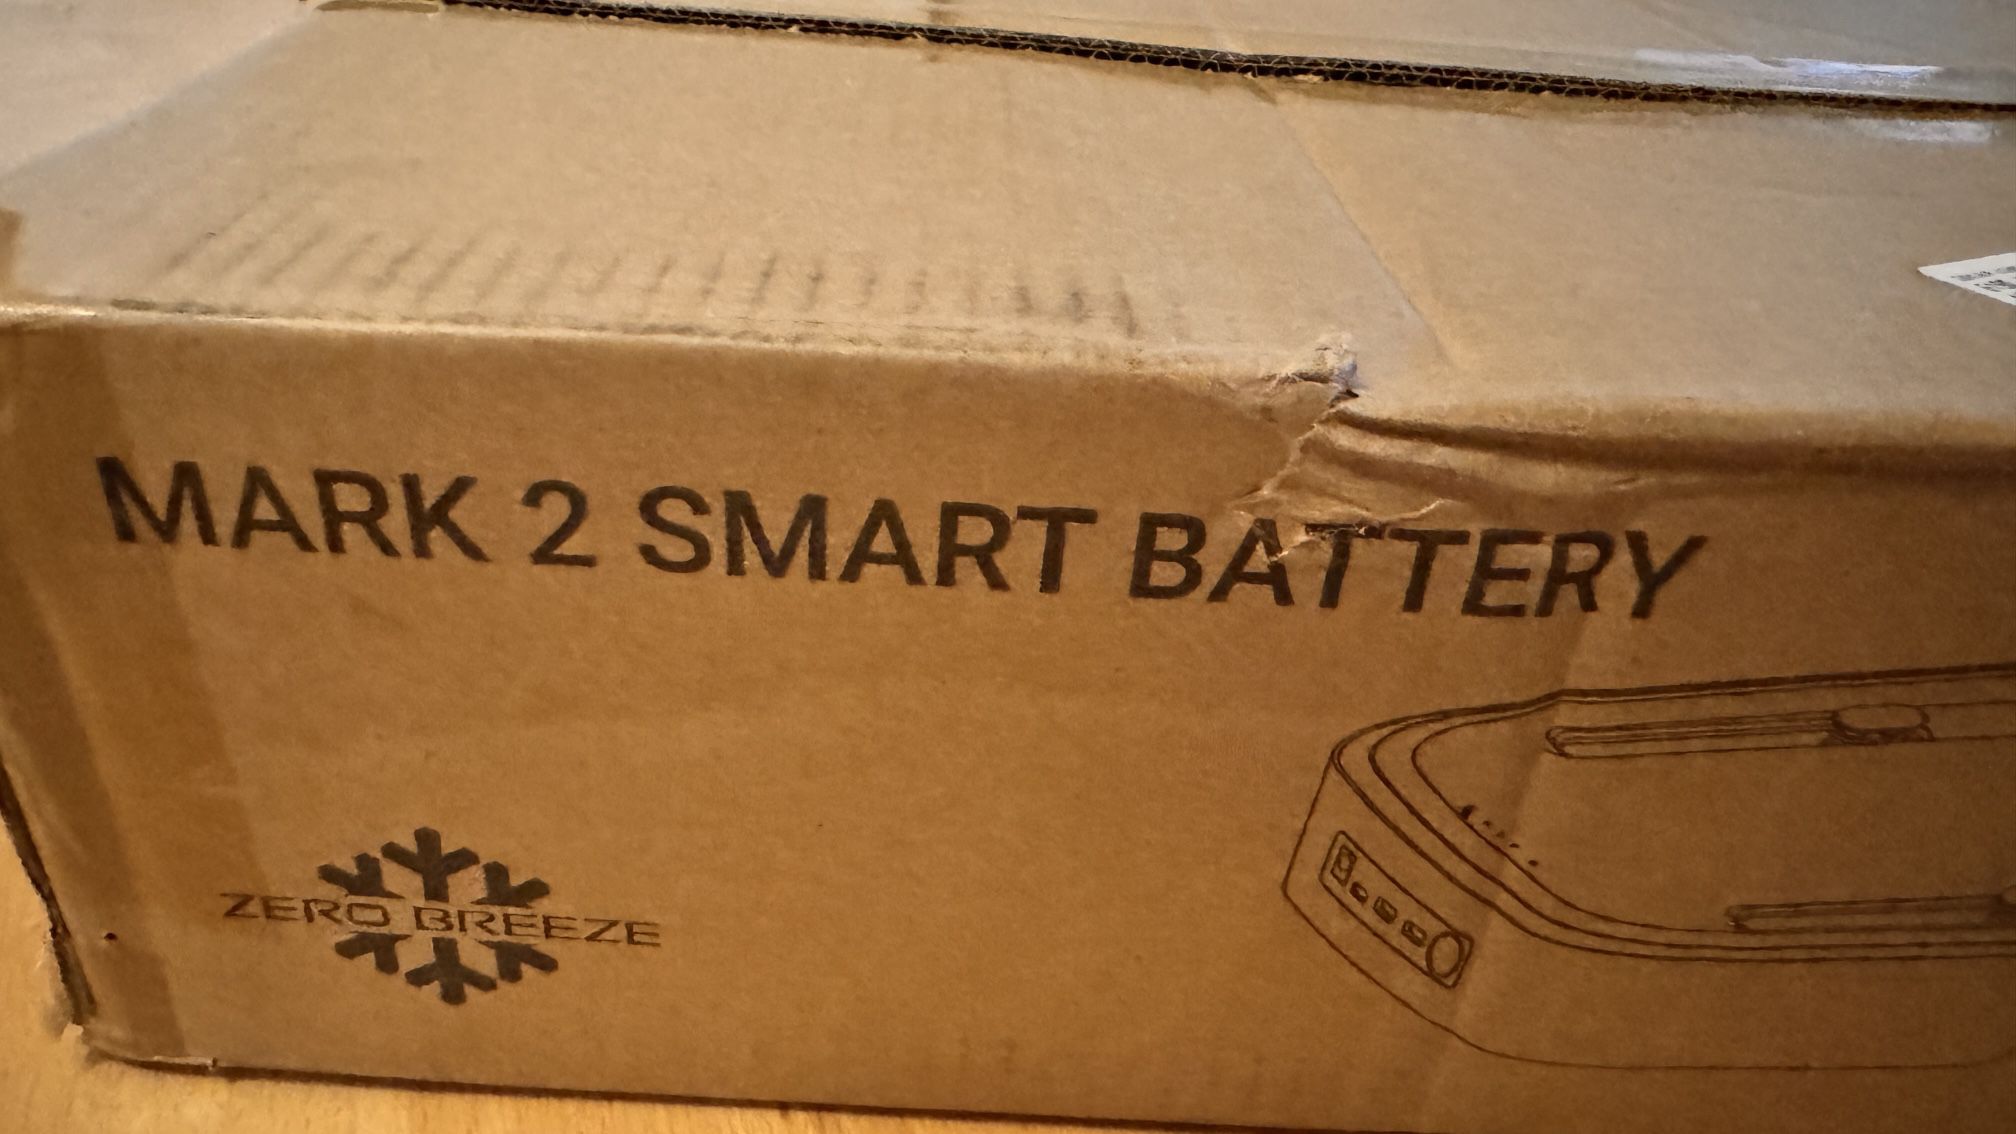 Mark 2 Smart Battery For Zero Breeze Mark2 Air Conditioner 